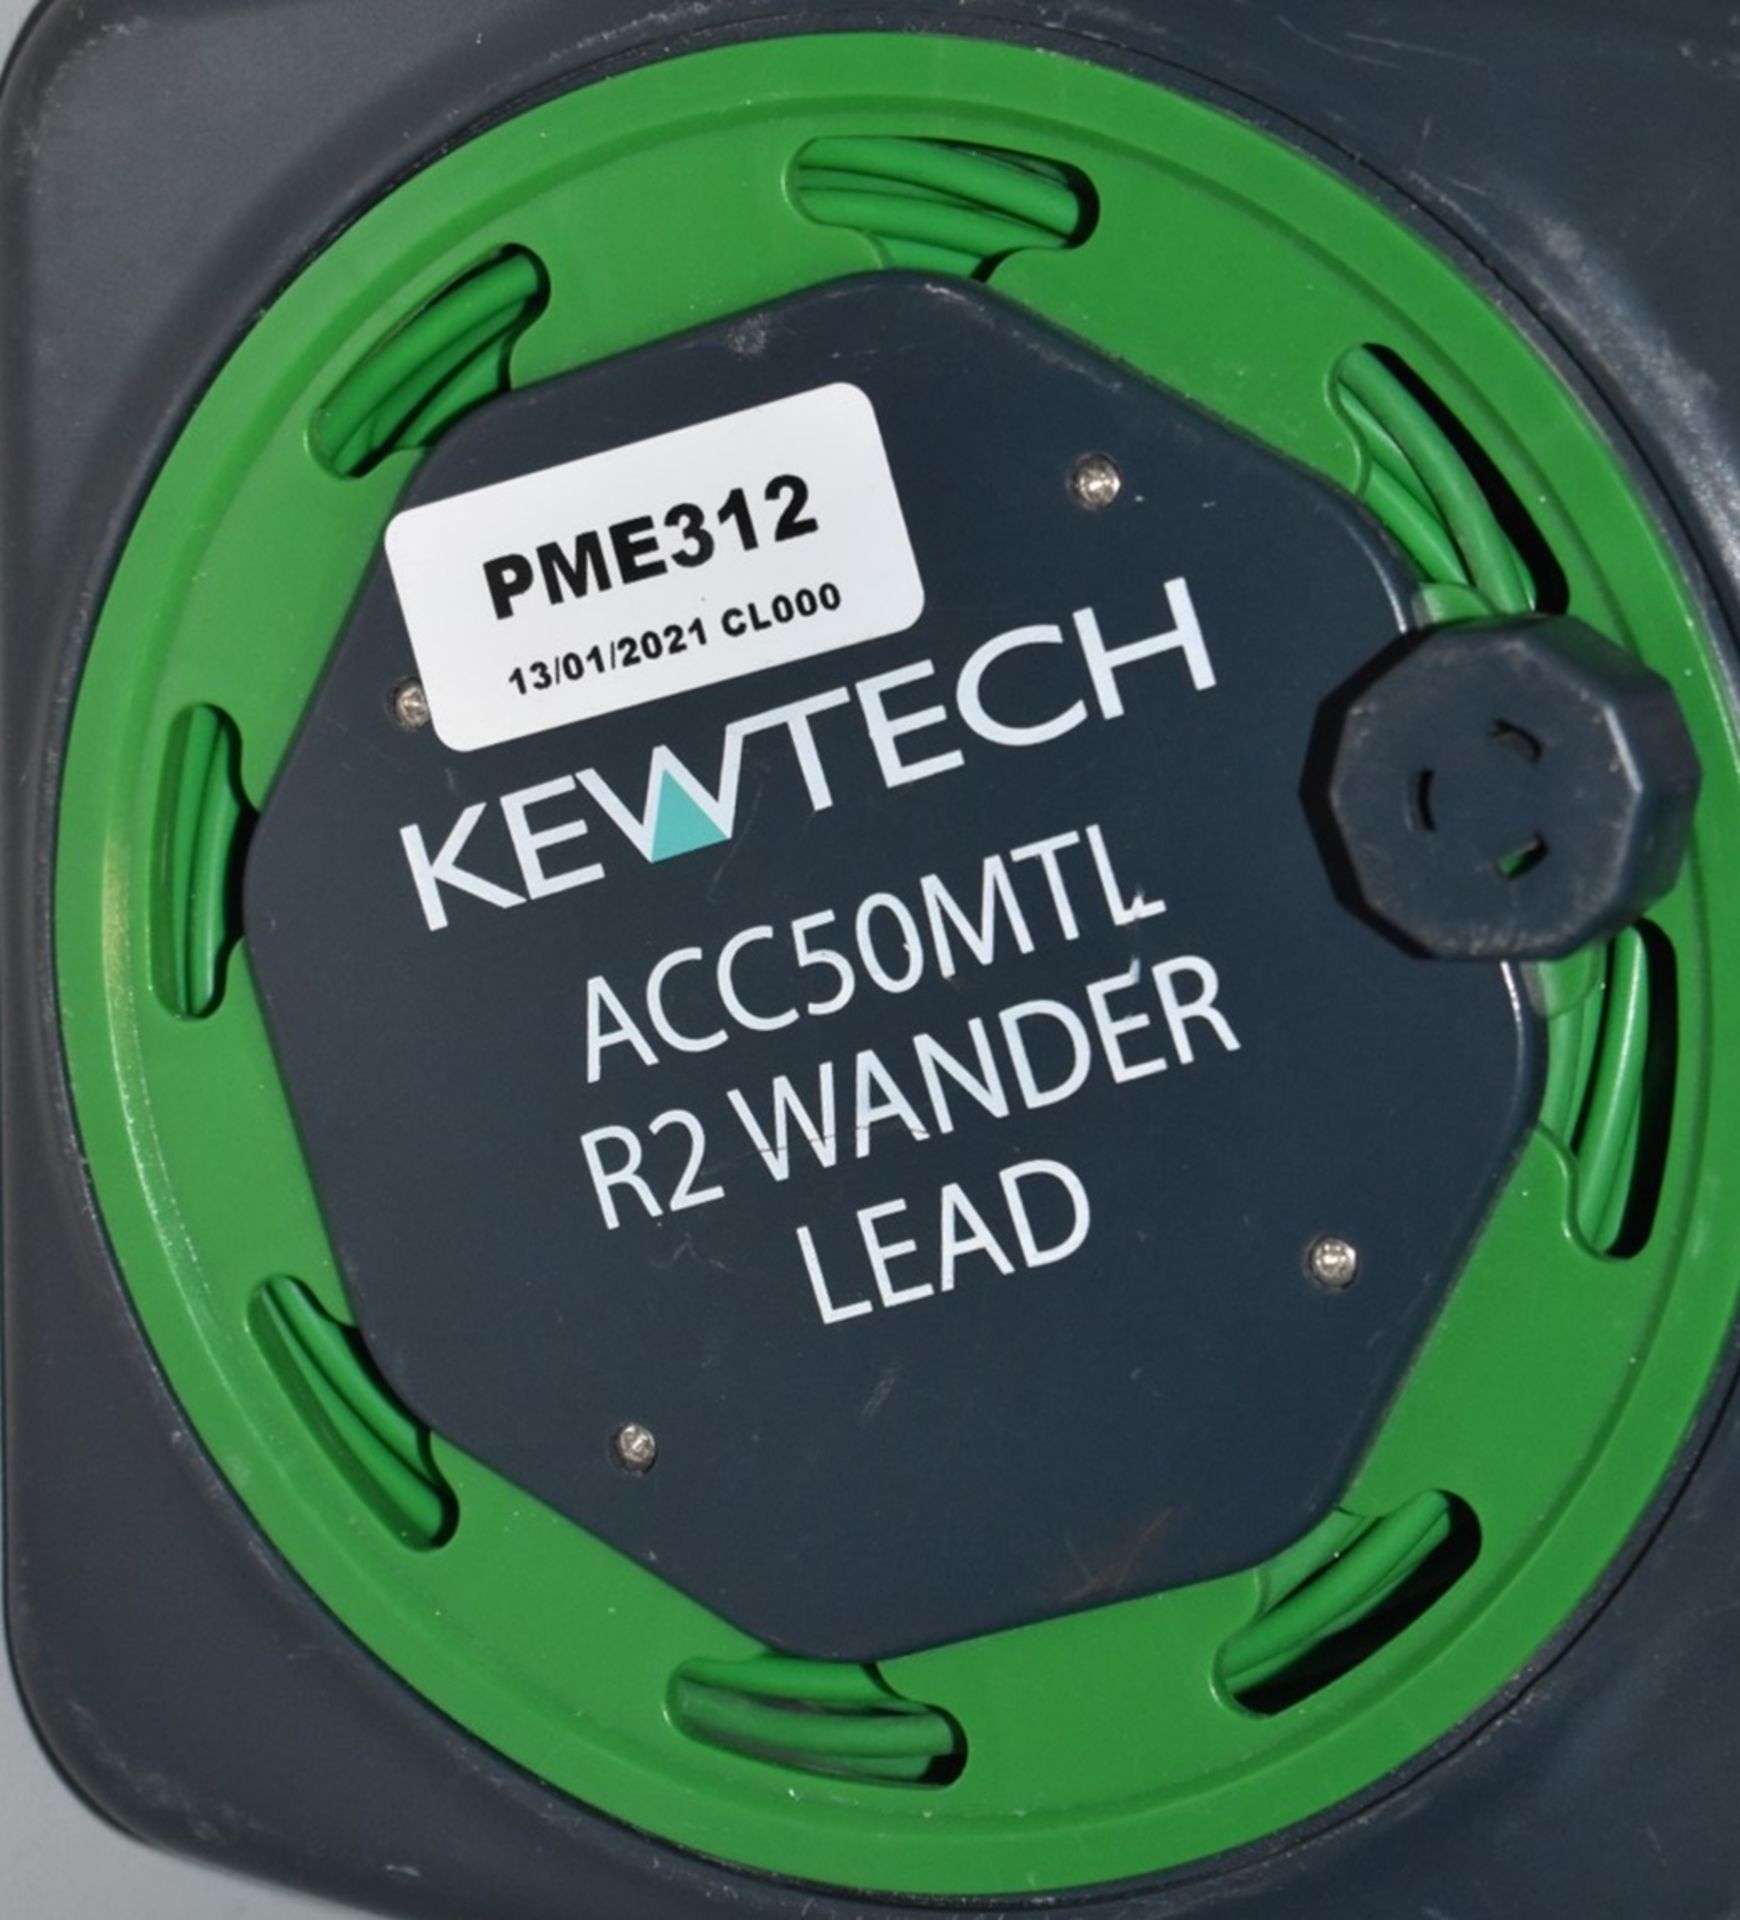 1 x Kewtech ACC50MTL 50m R2 Wander Test Lead Extension Reel RRP £85  PME312 - Image 2 of 3